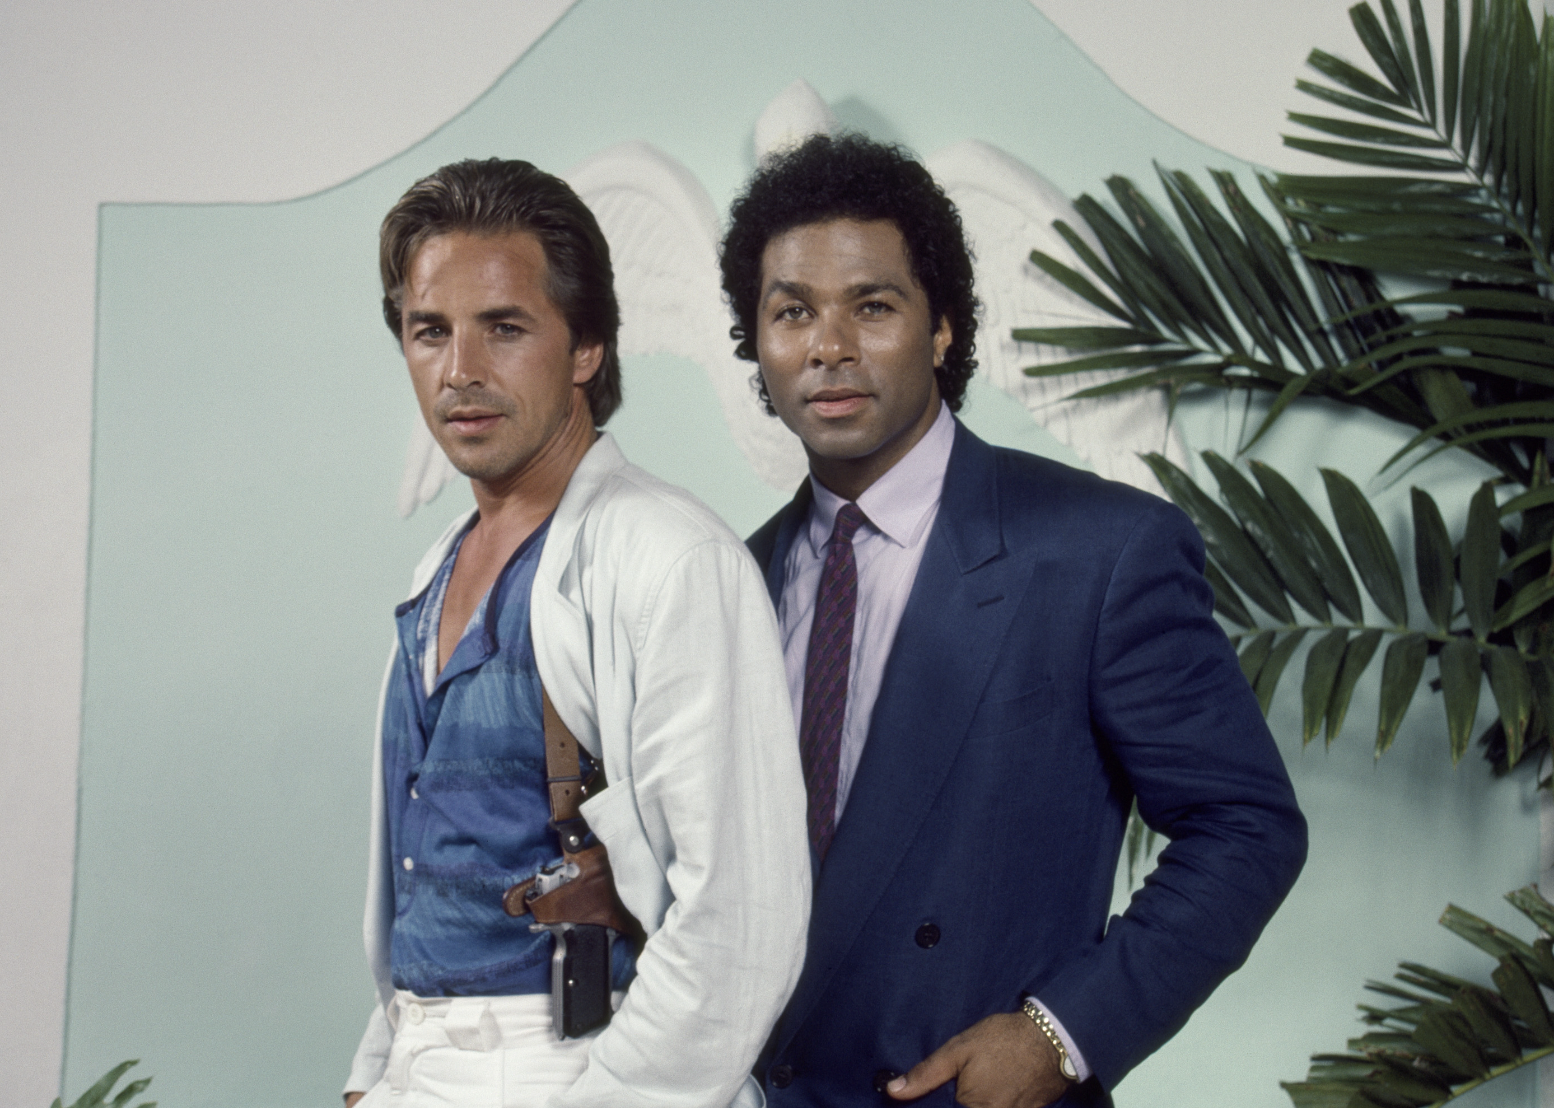 Don Johnson and Philip Michael Thomas in "Miami Vice"